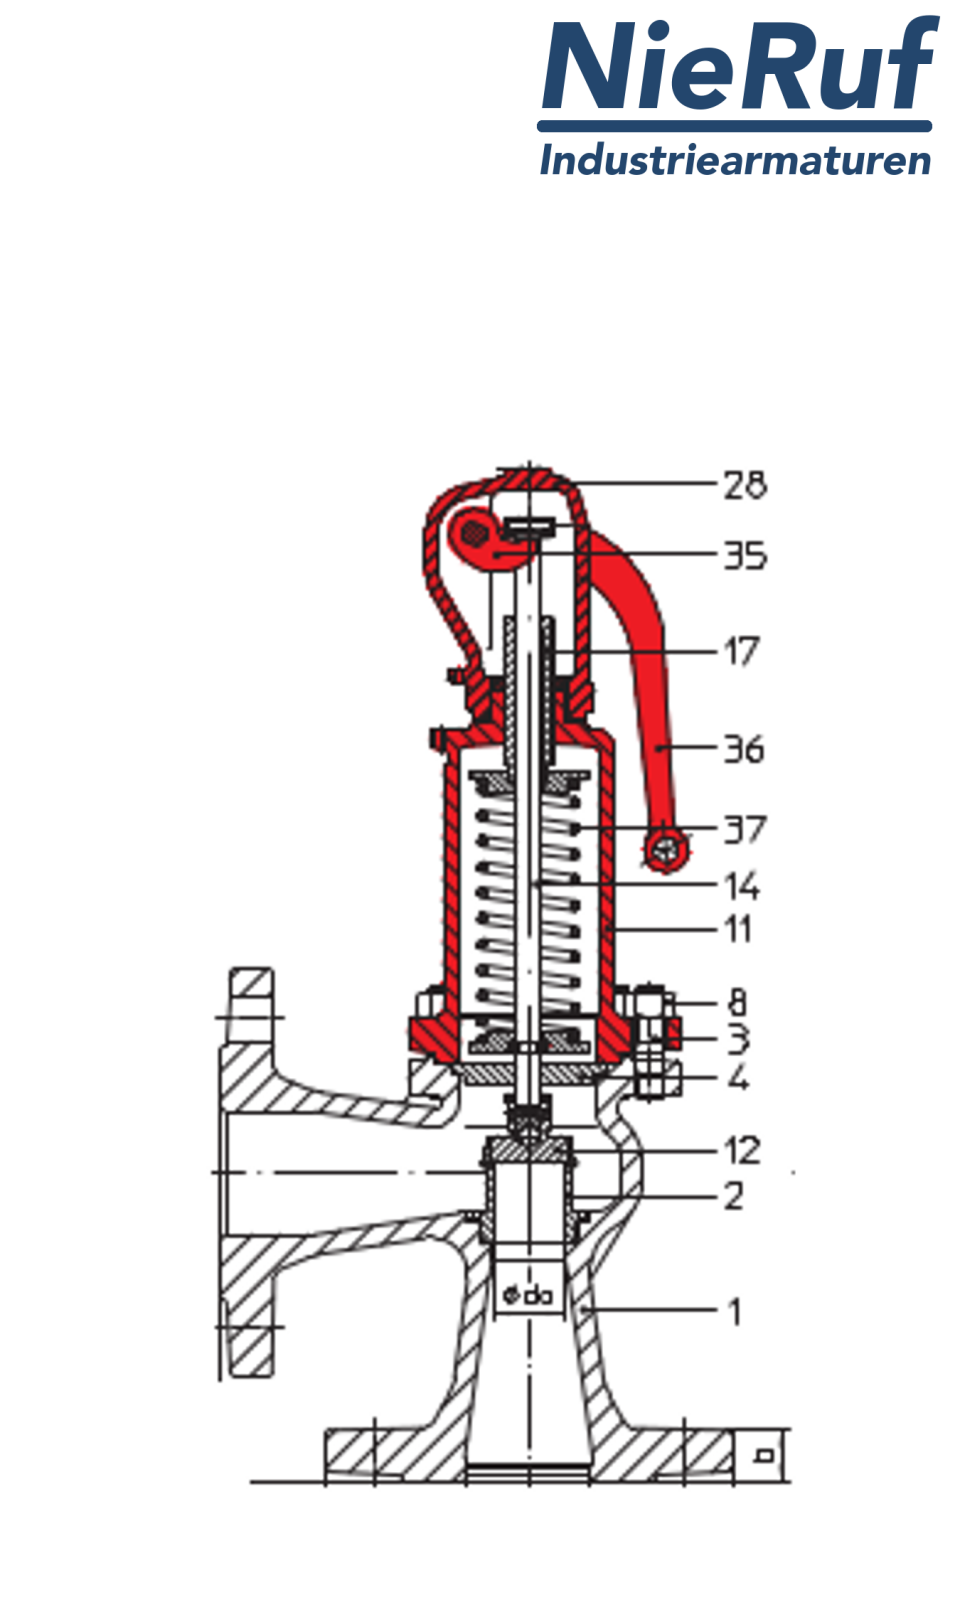 flange-safety valve DN25/DN25 SF01, cast iron EN-JL1040 FPM, with lever